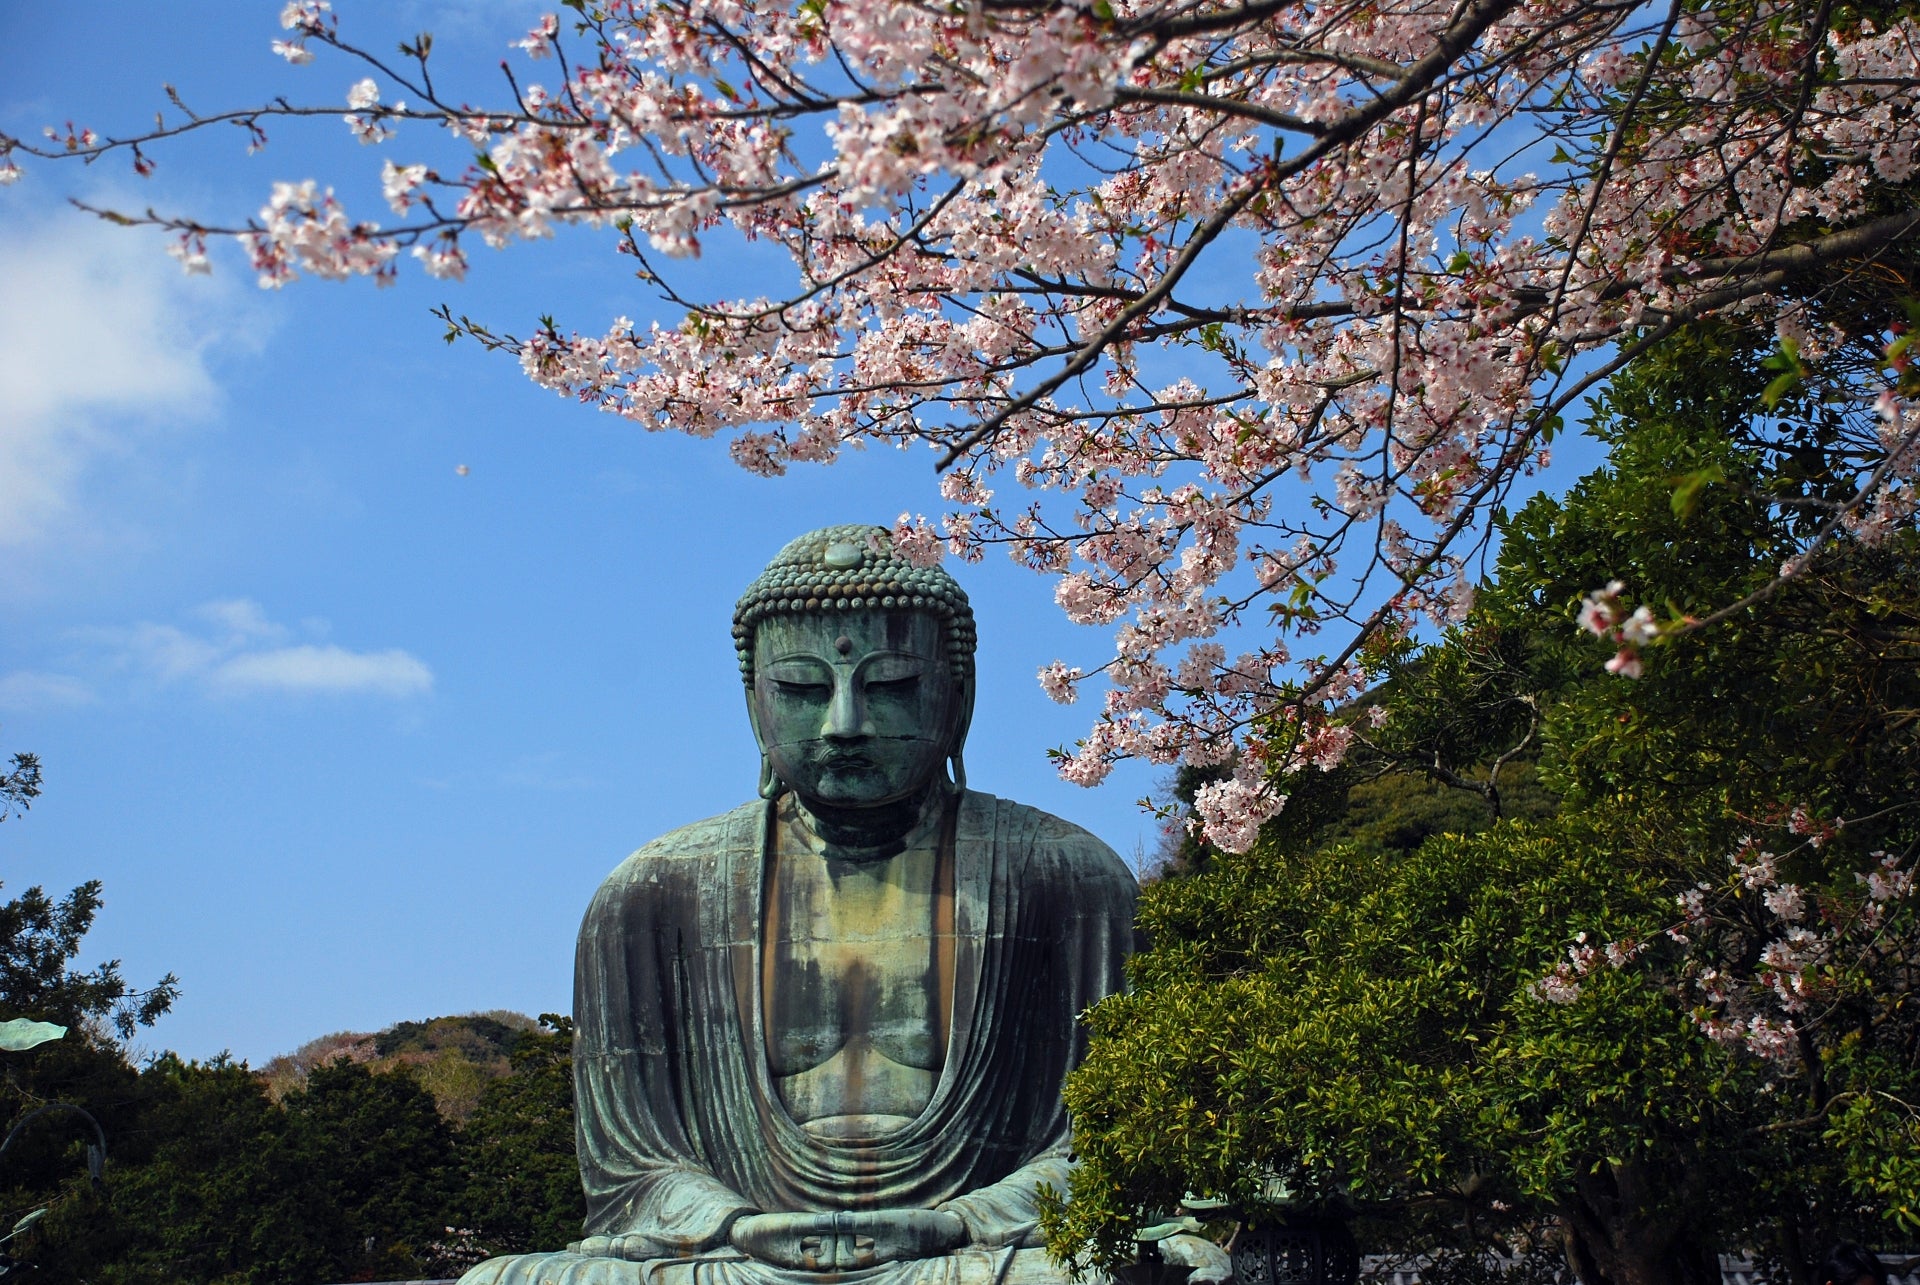 Kamakura - the nearest ancient city from Tokyo